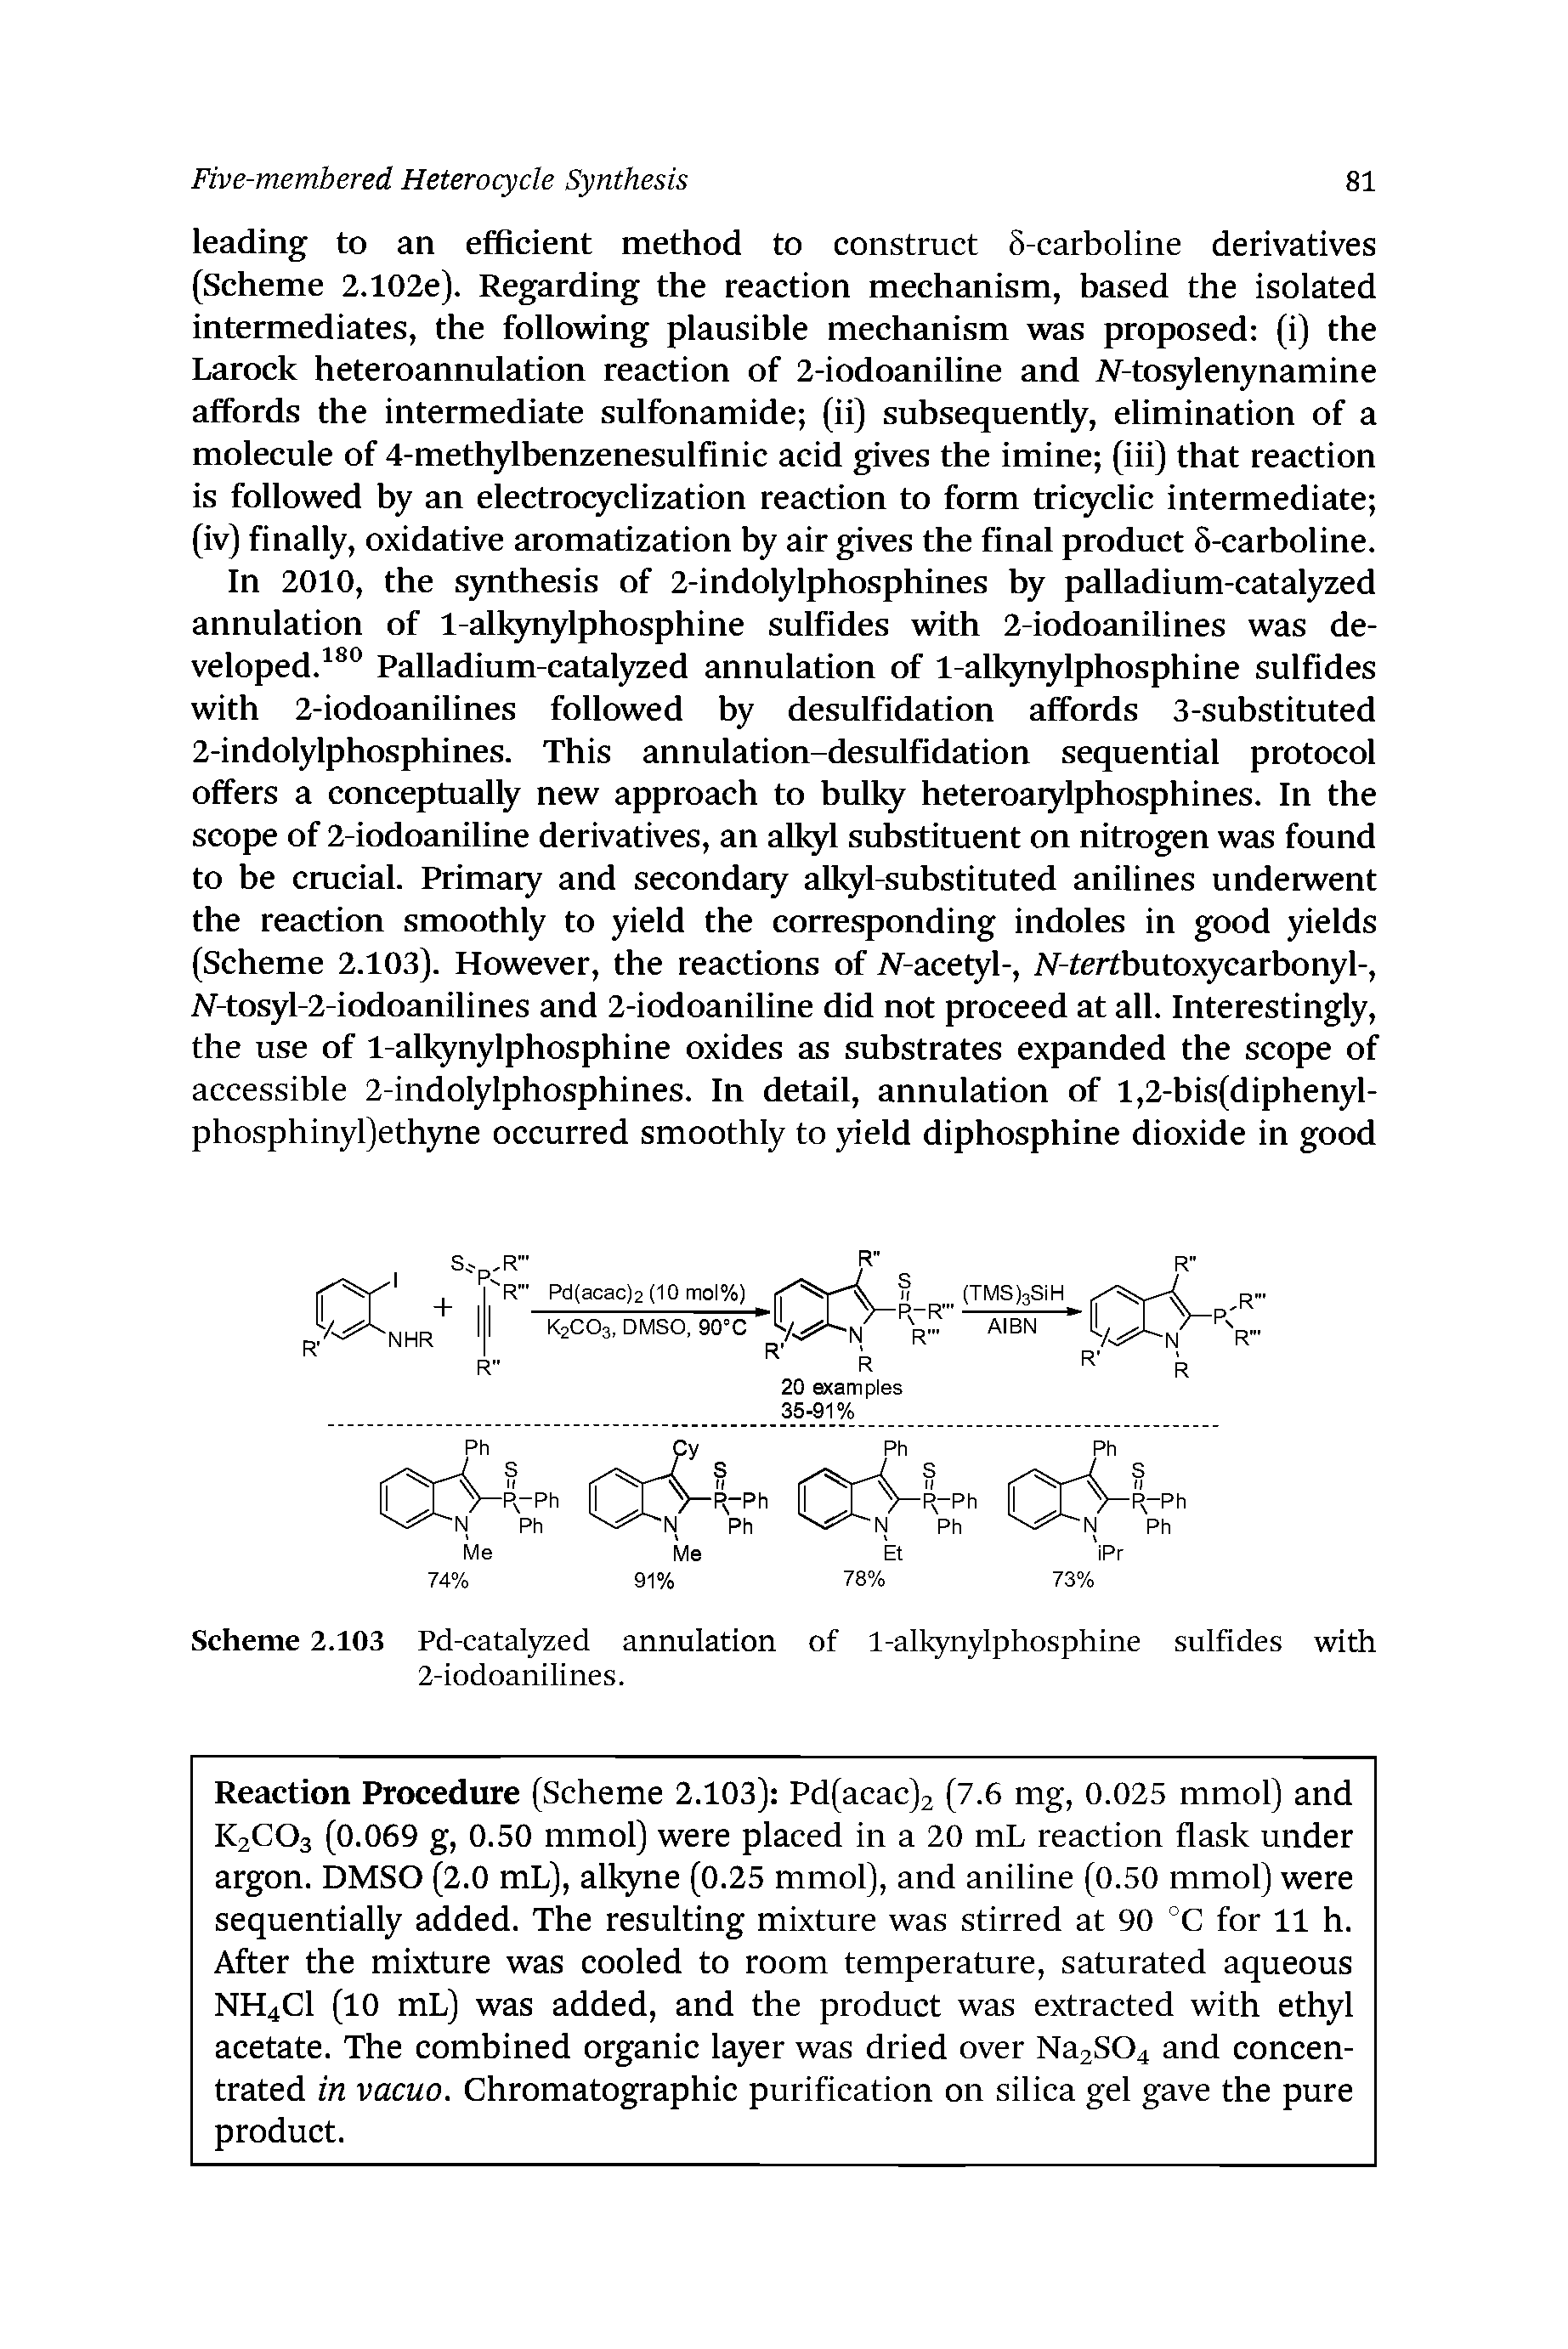 Scheme 2.103 Pd-catalyzed annulation of 1-alkynylphosphine sulfides with 2-iodoanilines.